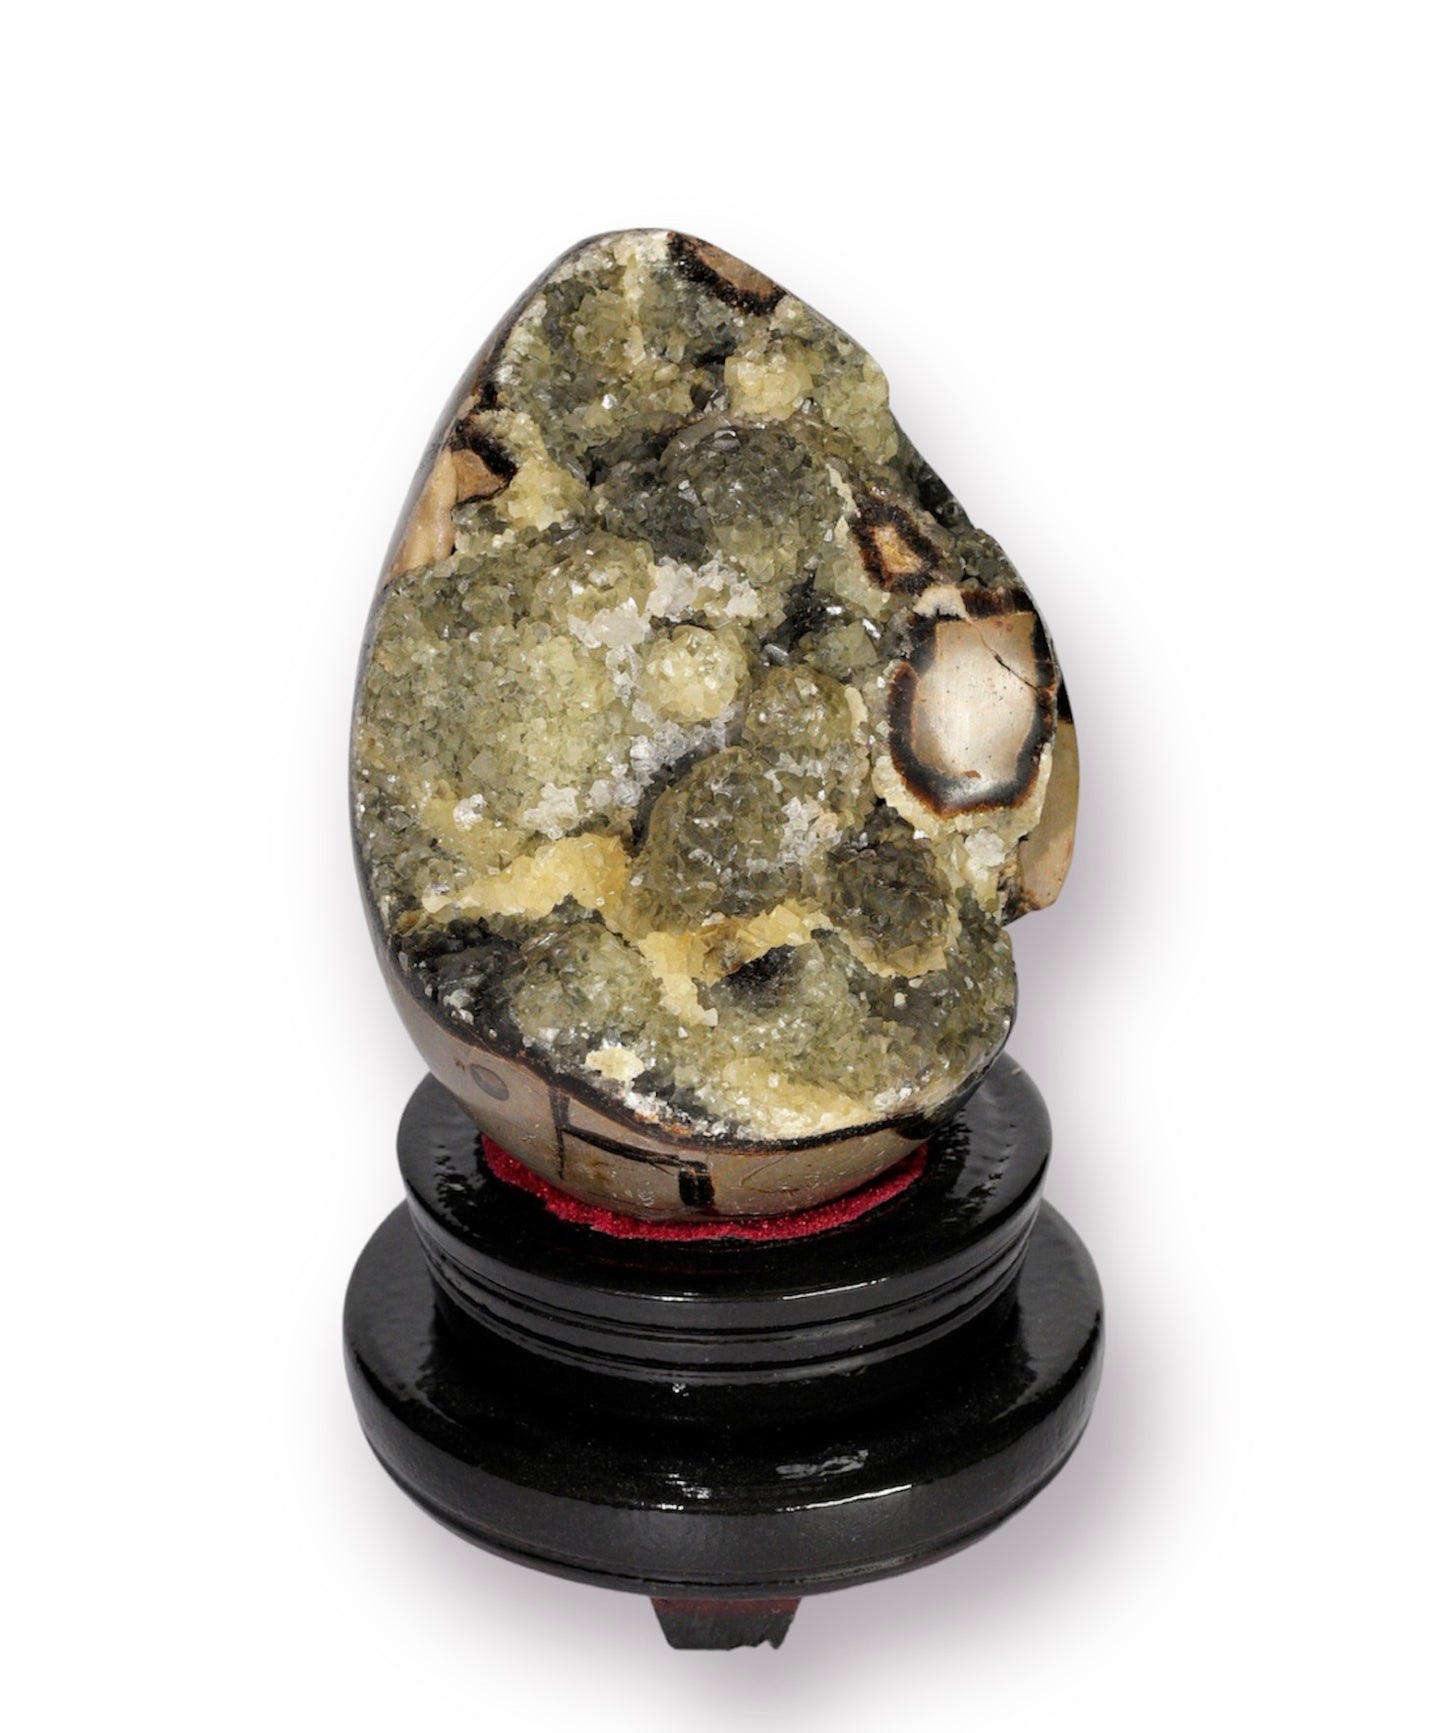 5.1" Polished, Multi-Colored Calcite Filled Septarian Geode "Egg" - Madagascar